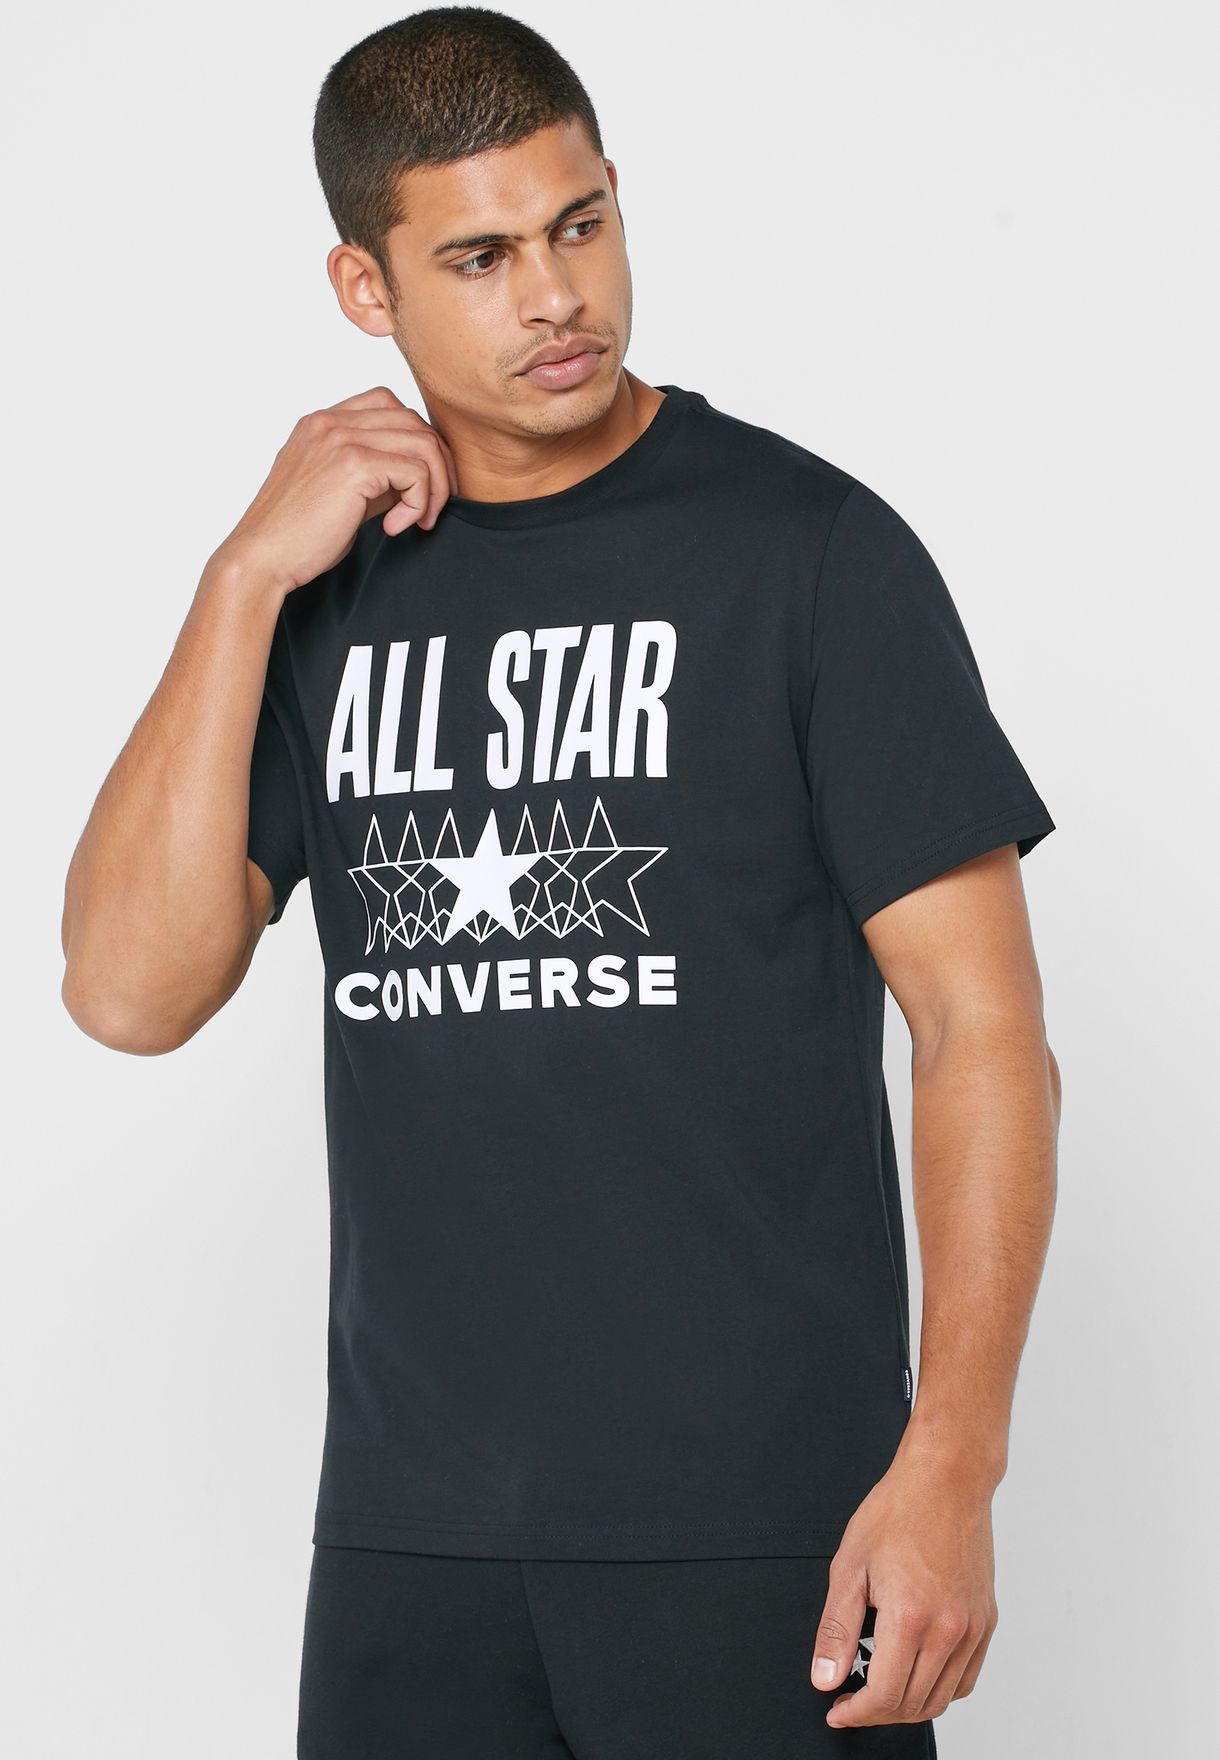 converse black shirt